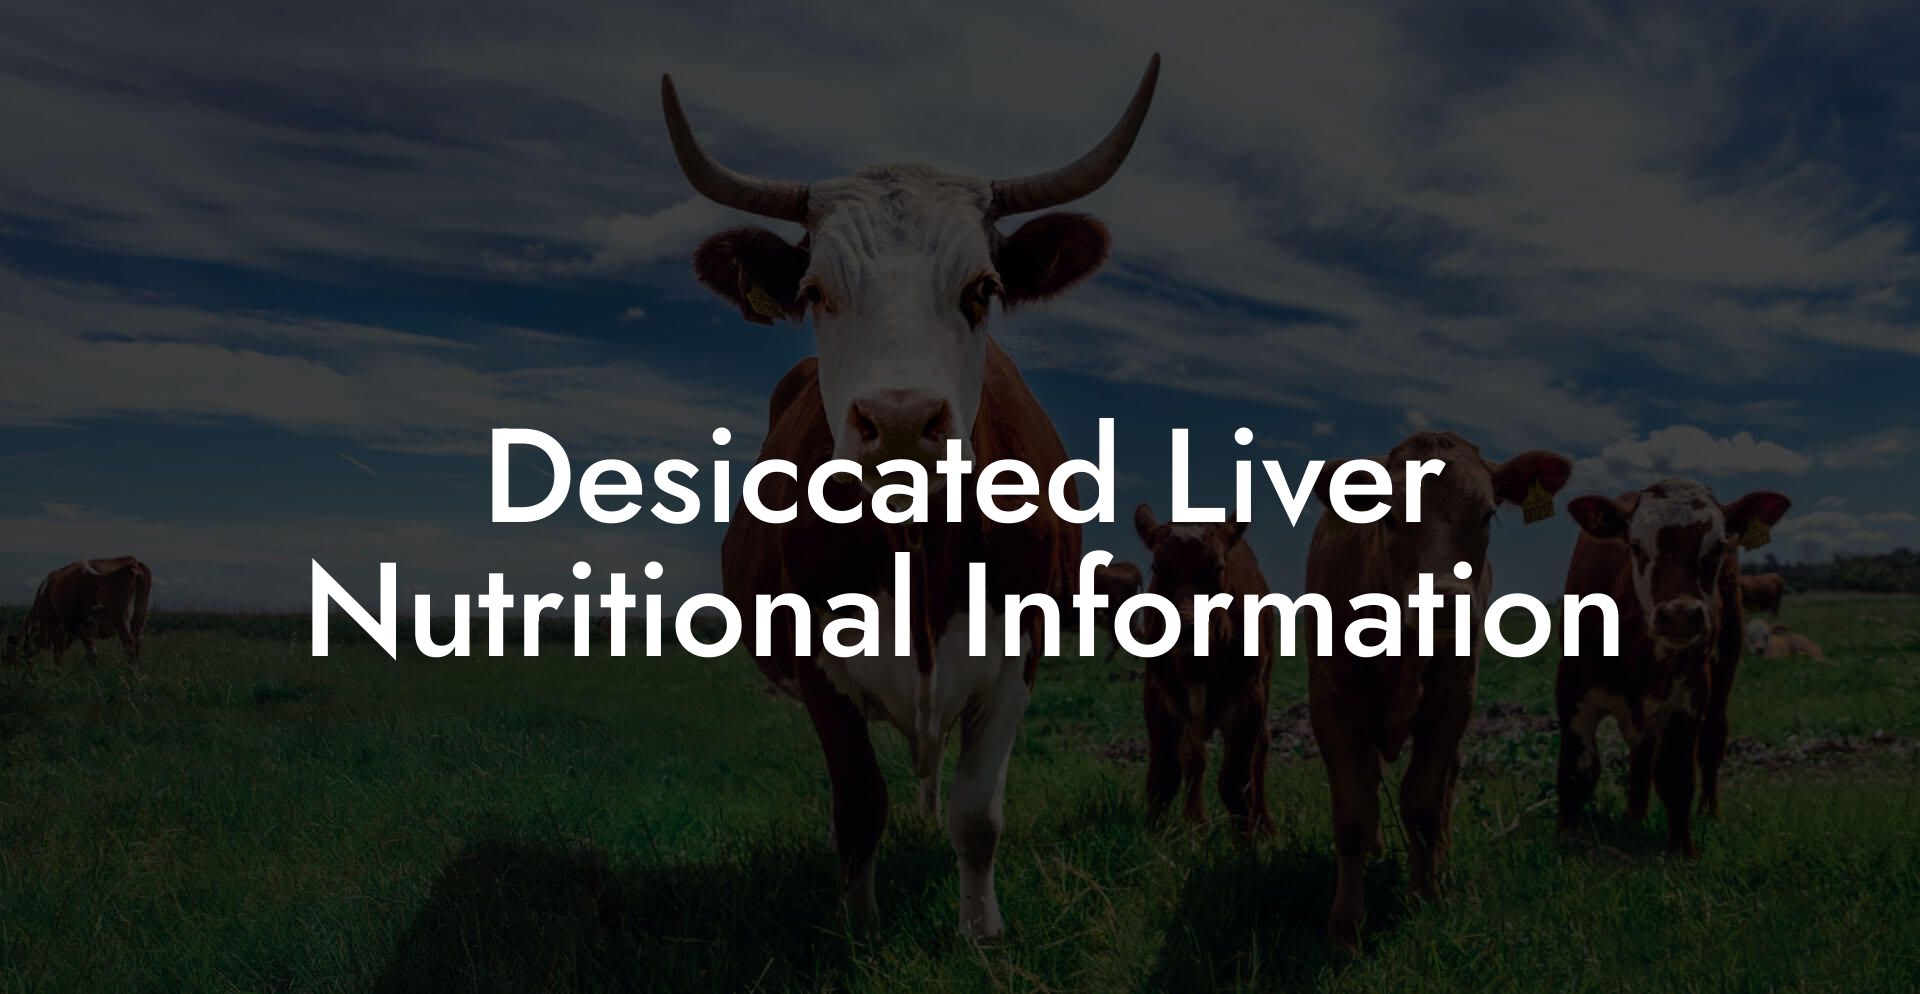 Desiccated Liver Nutritional Information